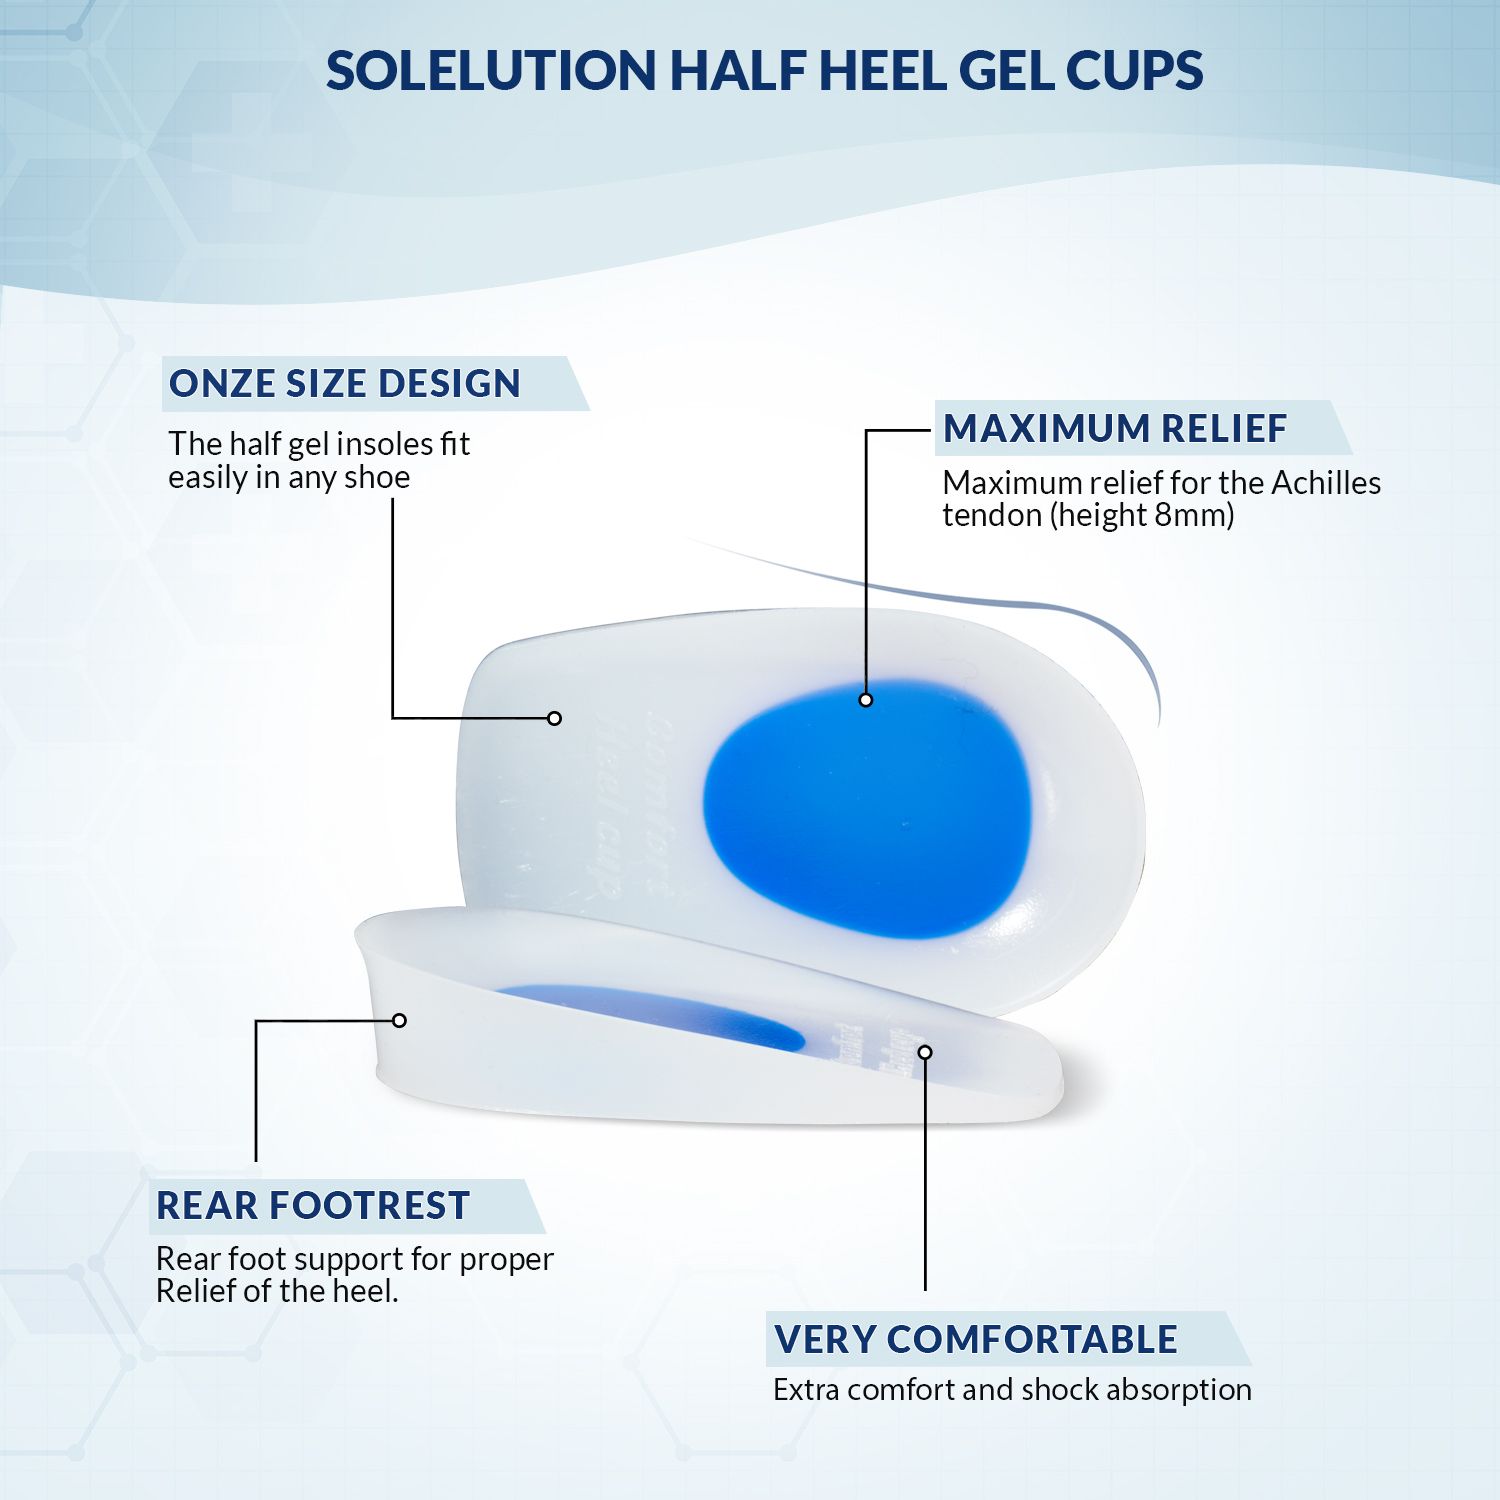 picture of heels placed in the solelution half heel gel cups correctly